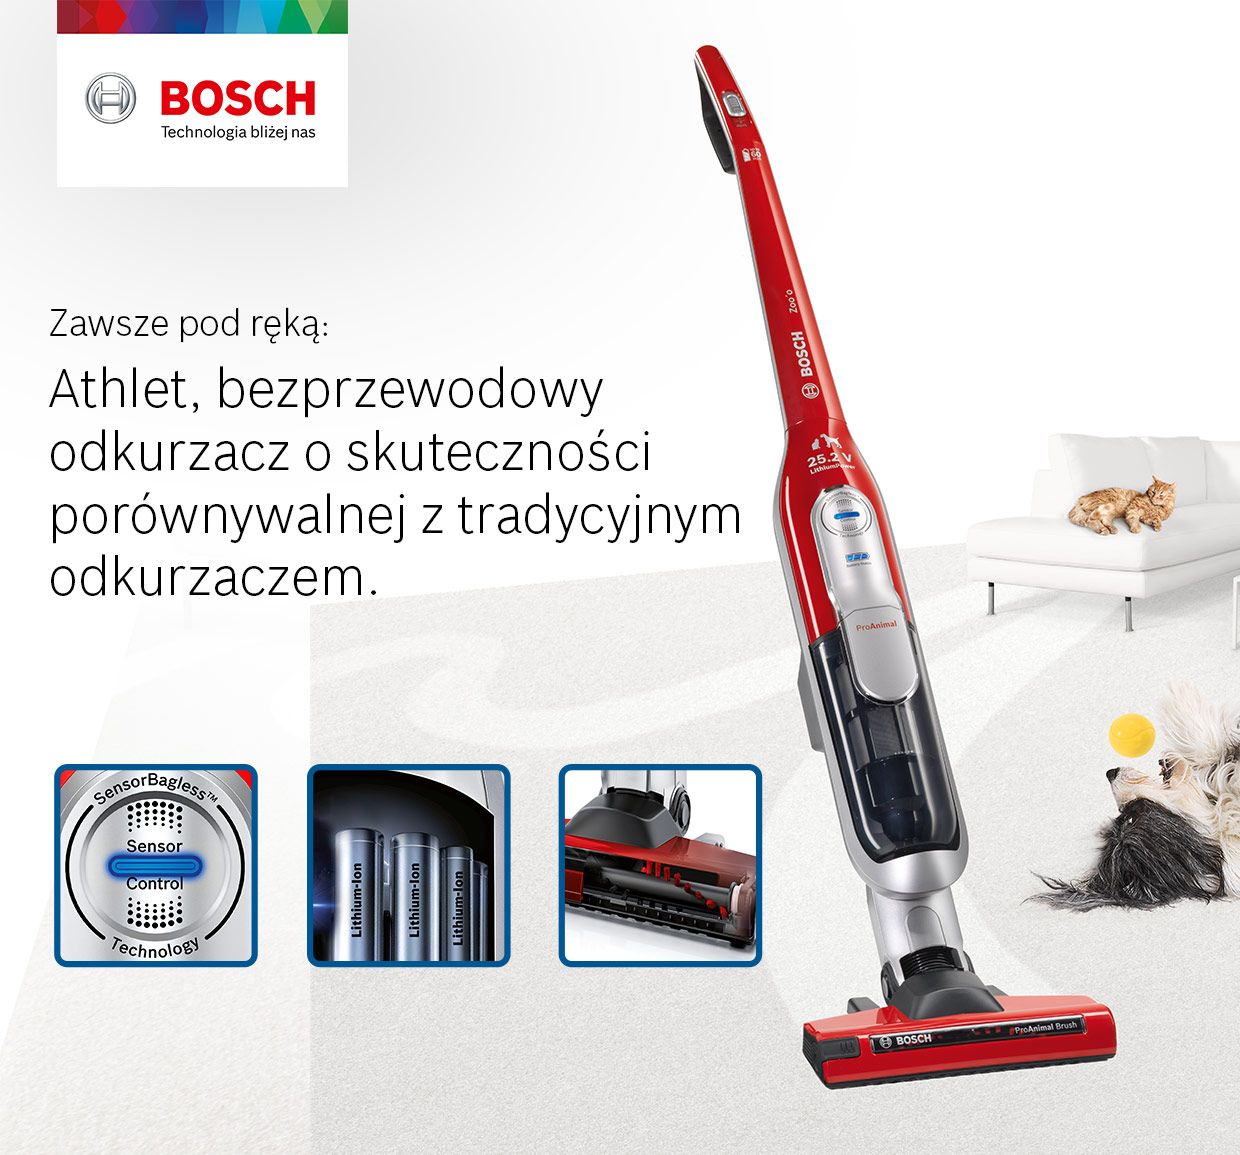 Bosch athlet 25.2 v. Аккумулятор для пылесоса Bosch Athlet. Аккумулятор для Bosch Athlet 25.2v. Запчасти к пылесосу бош беспроводной. Аккумулятор для вертикального пылесоса Bosch Athlet.